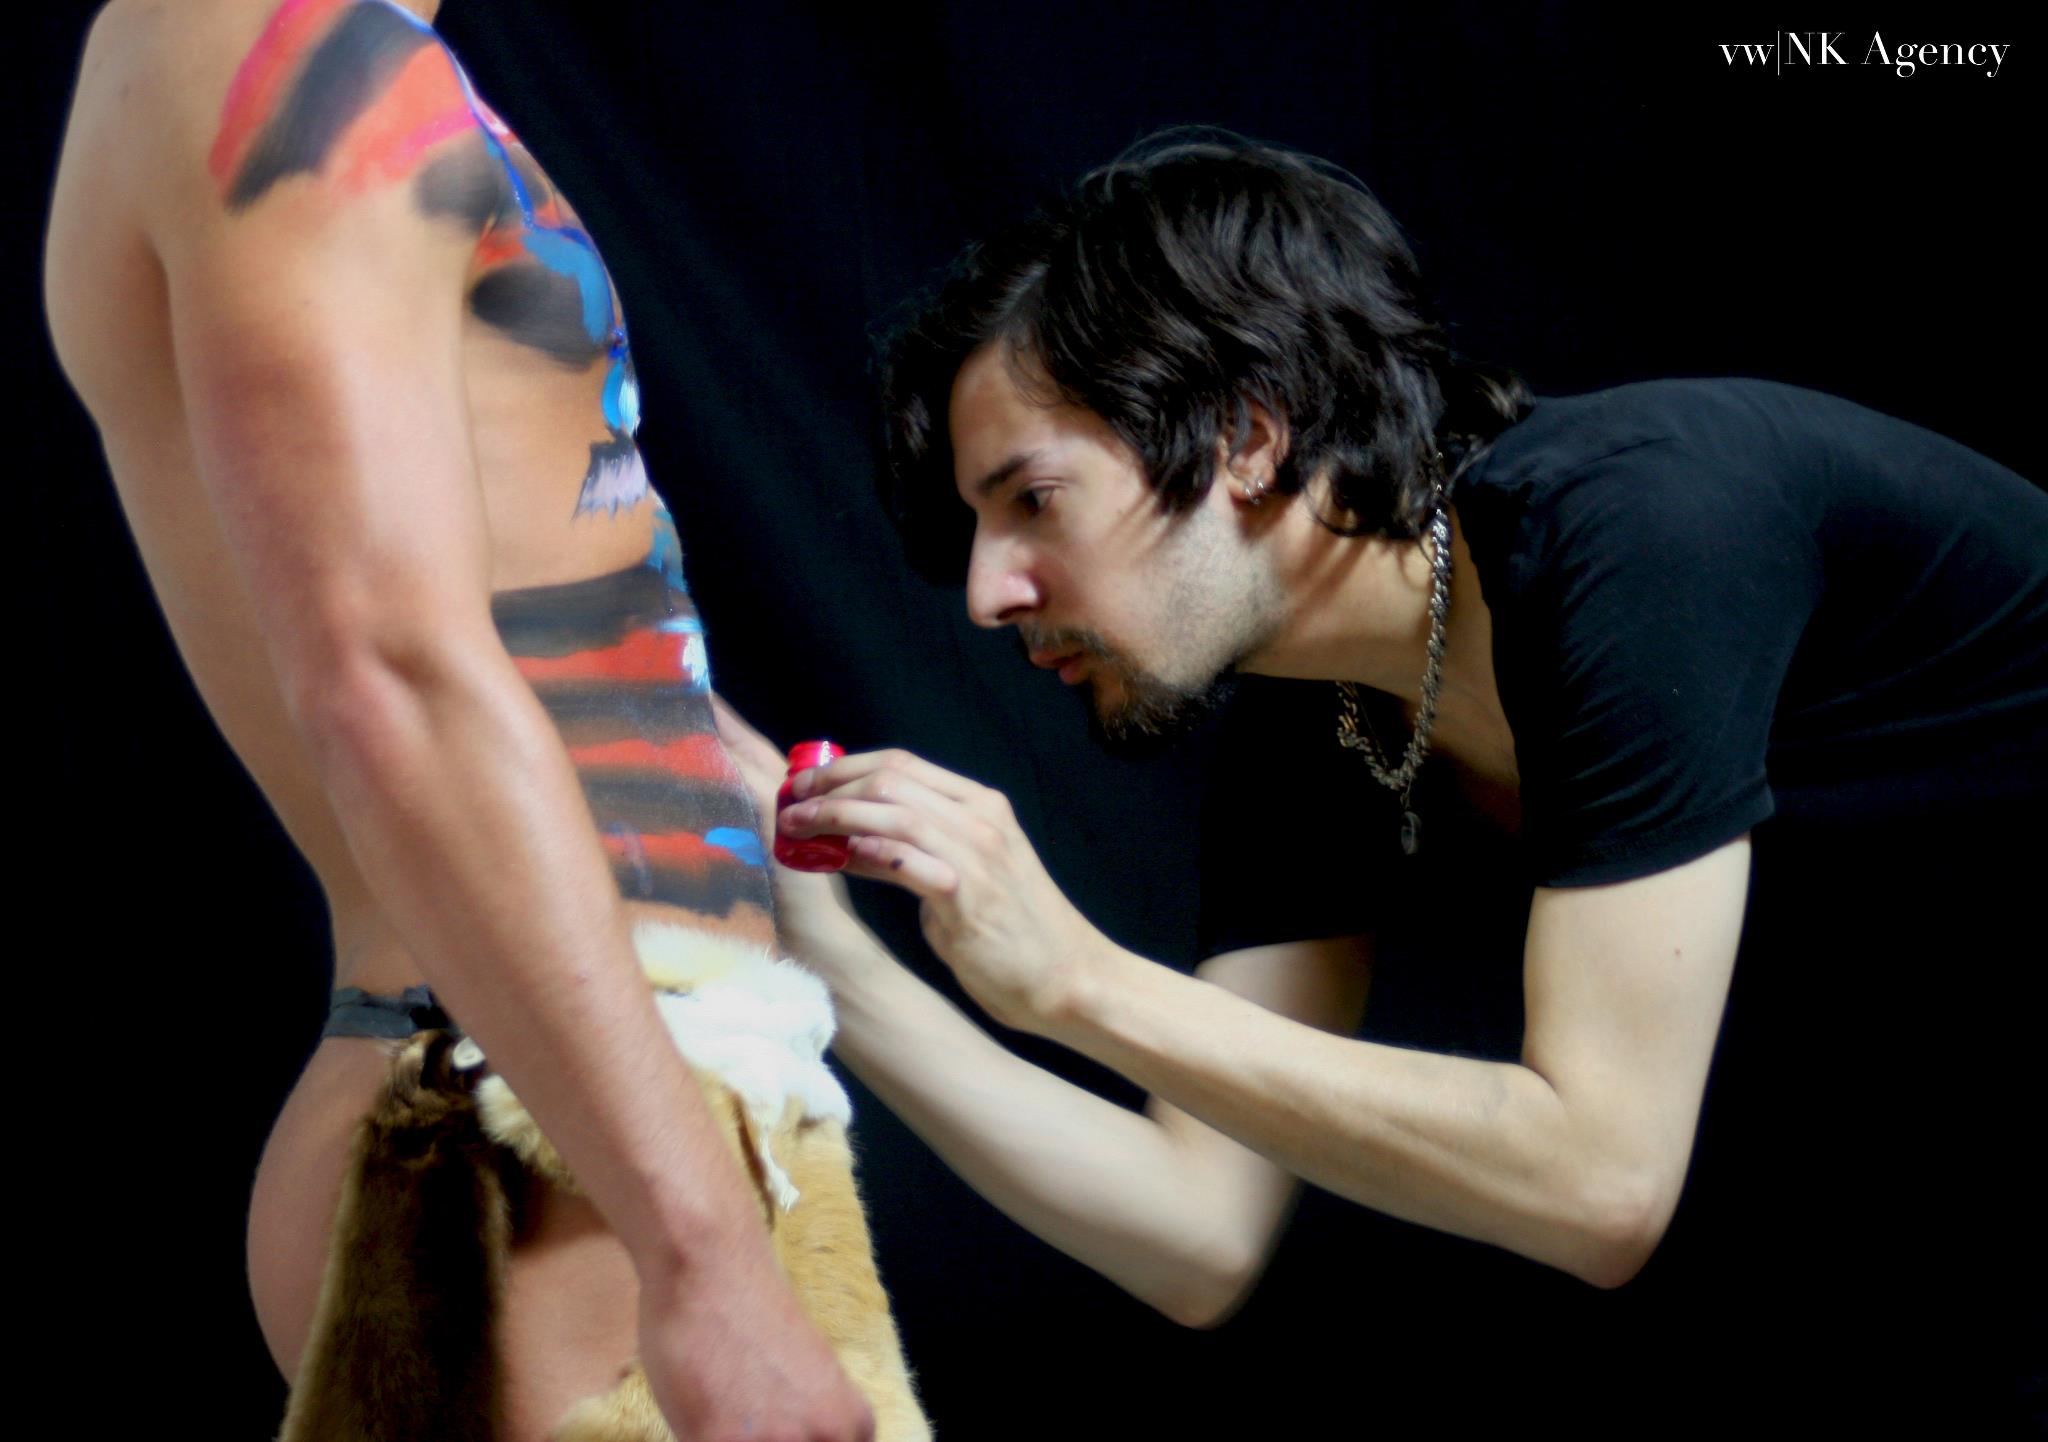 Zander body painting a male model.